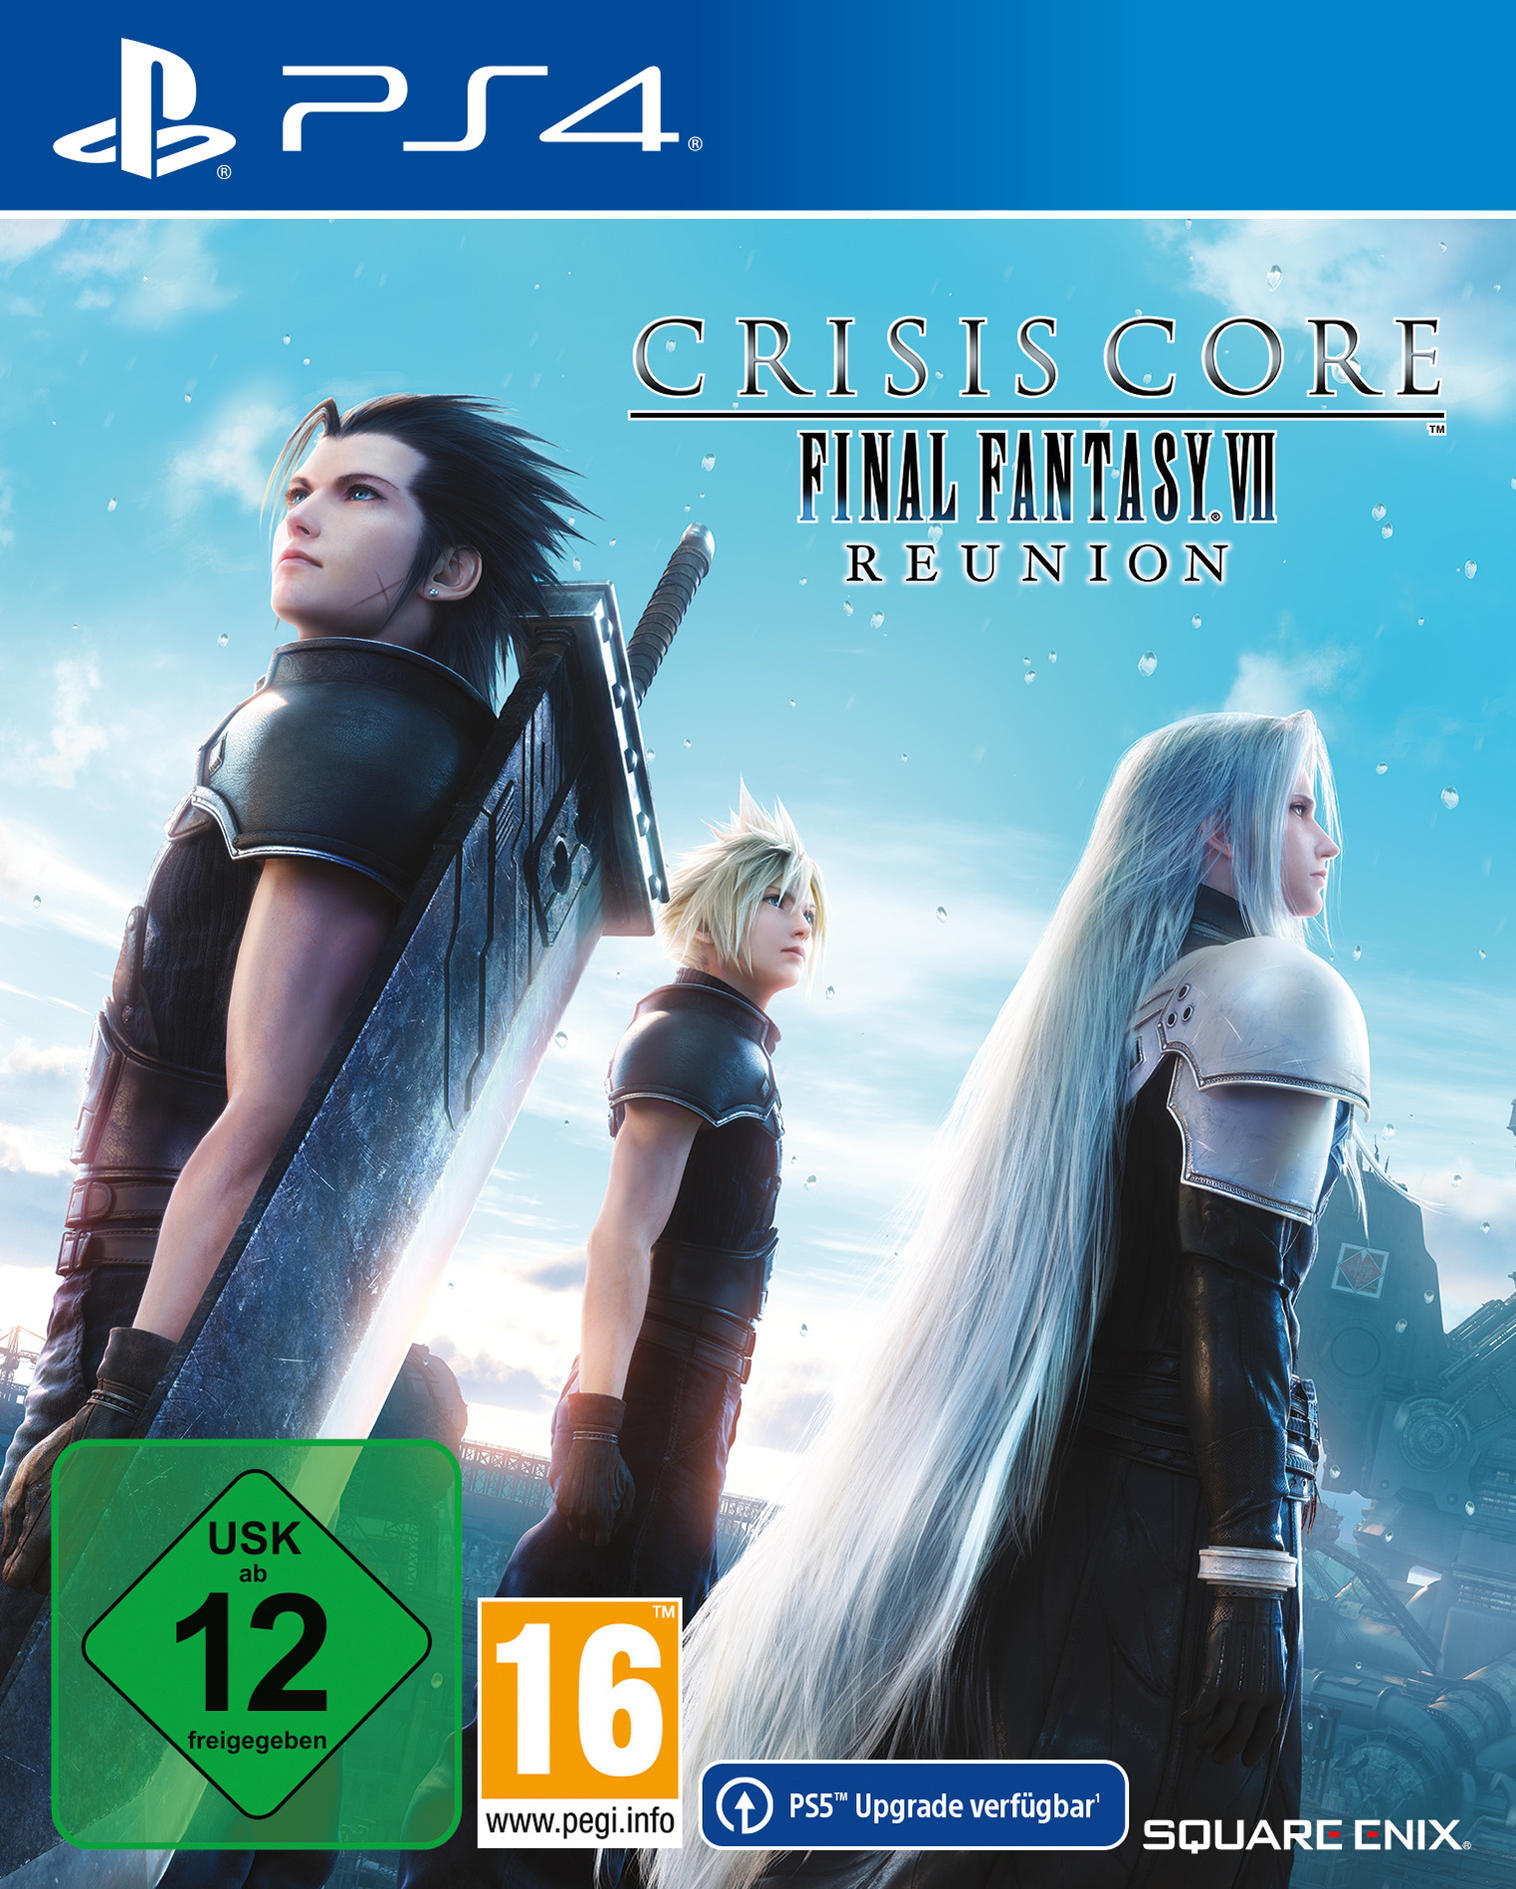 - FANTASY VII CORE FINAL [PlayStation 4] REUNION CRISIS PS4